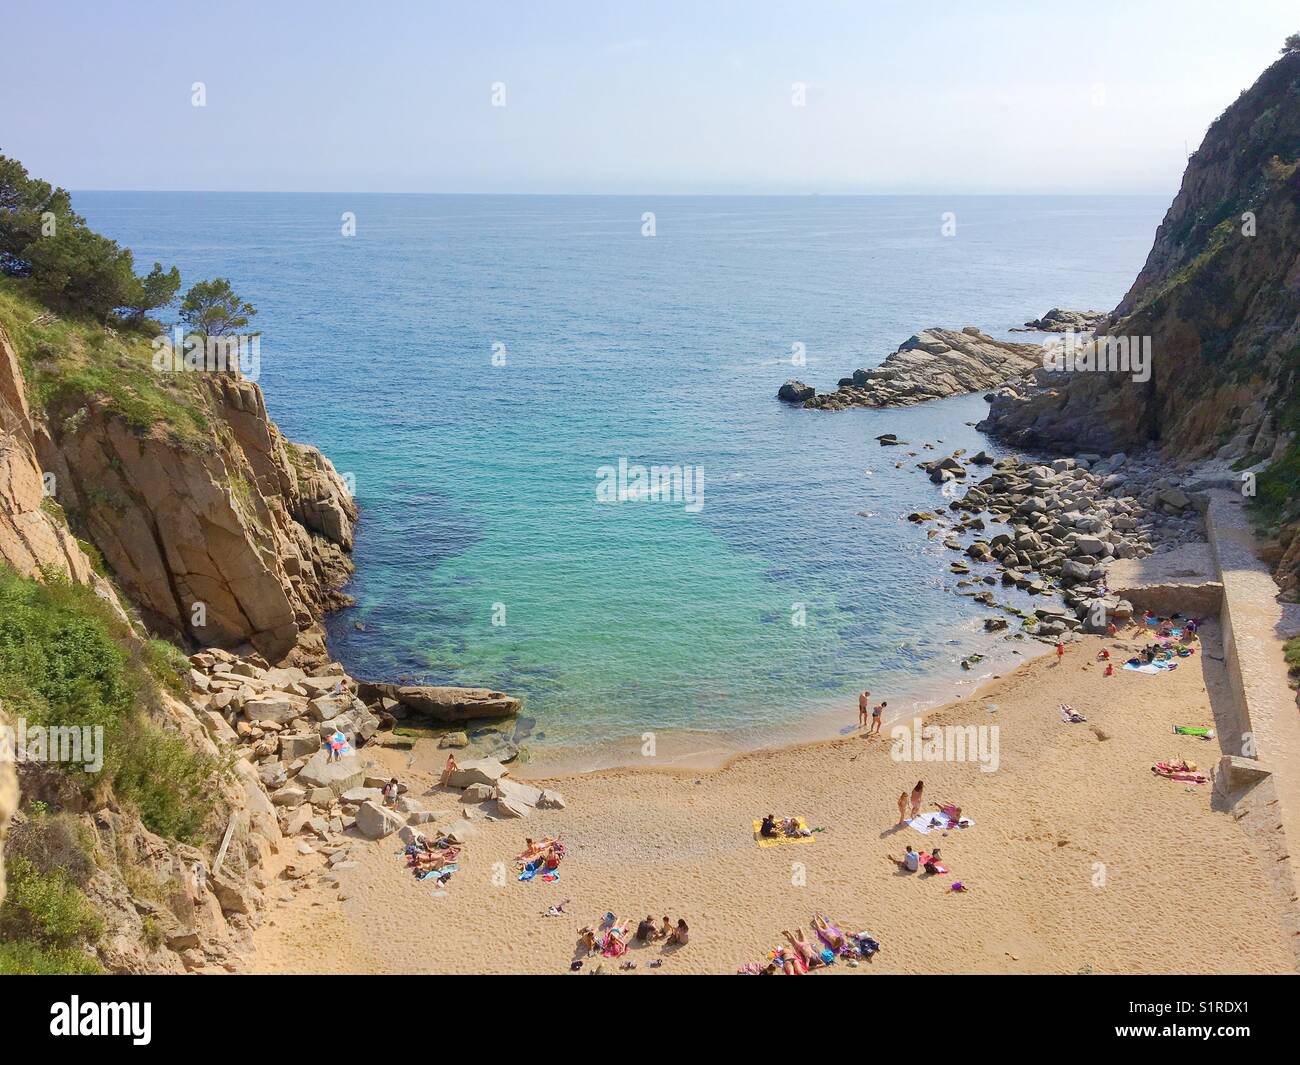 A Spanish sandy cove beach on the Costa Dorada overlooking the Mediterranean Sea Stock Photo